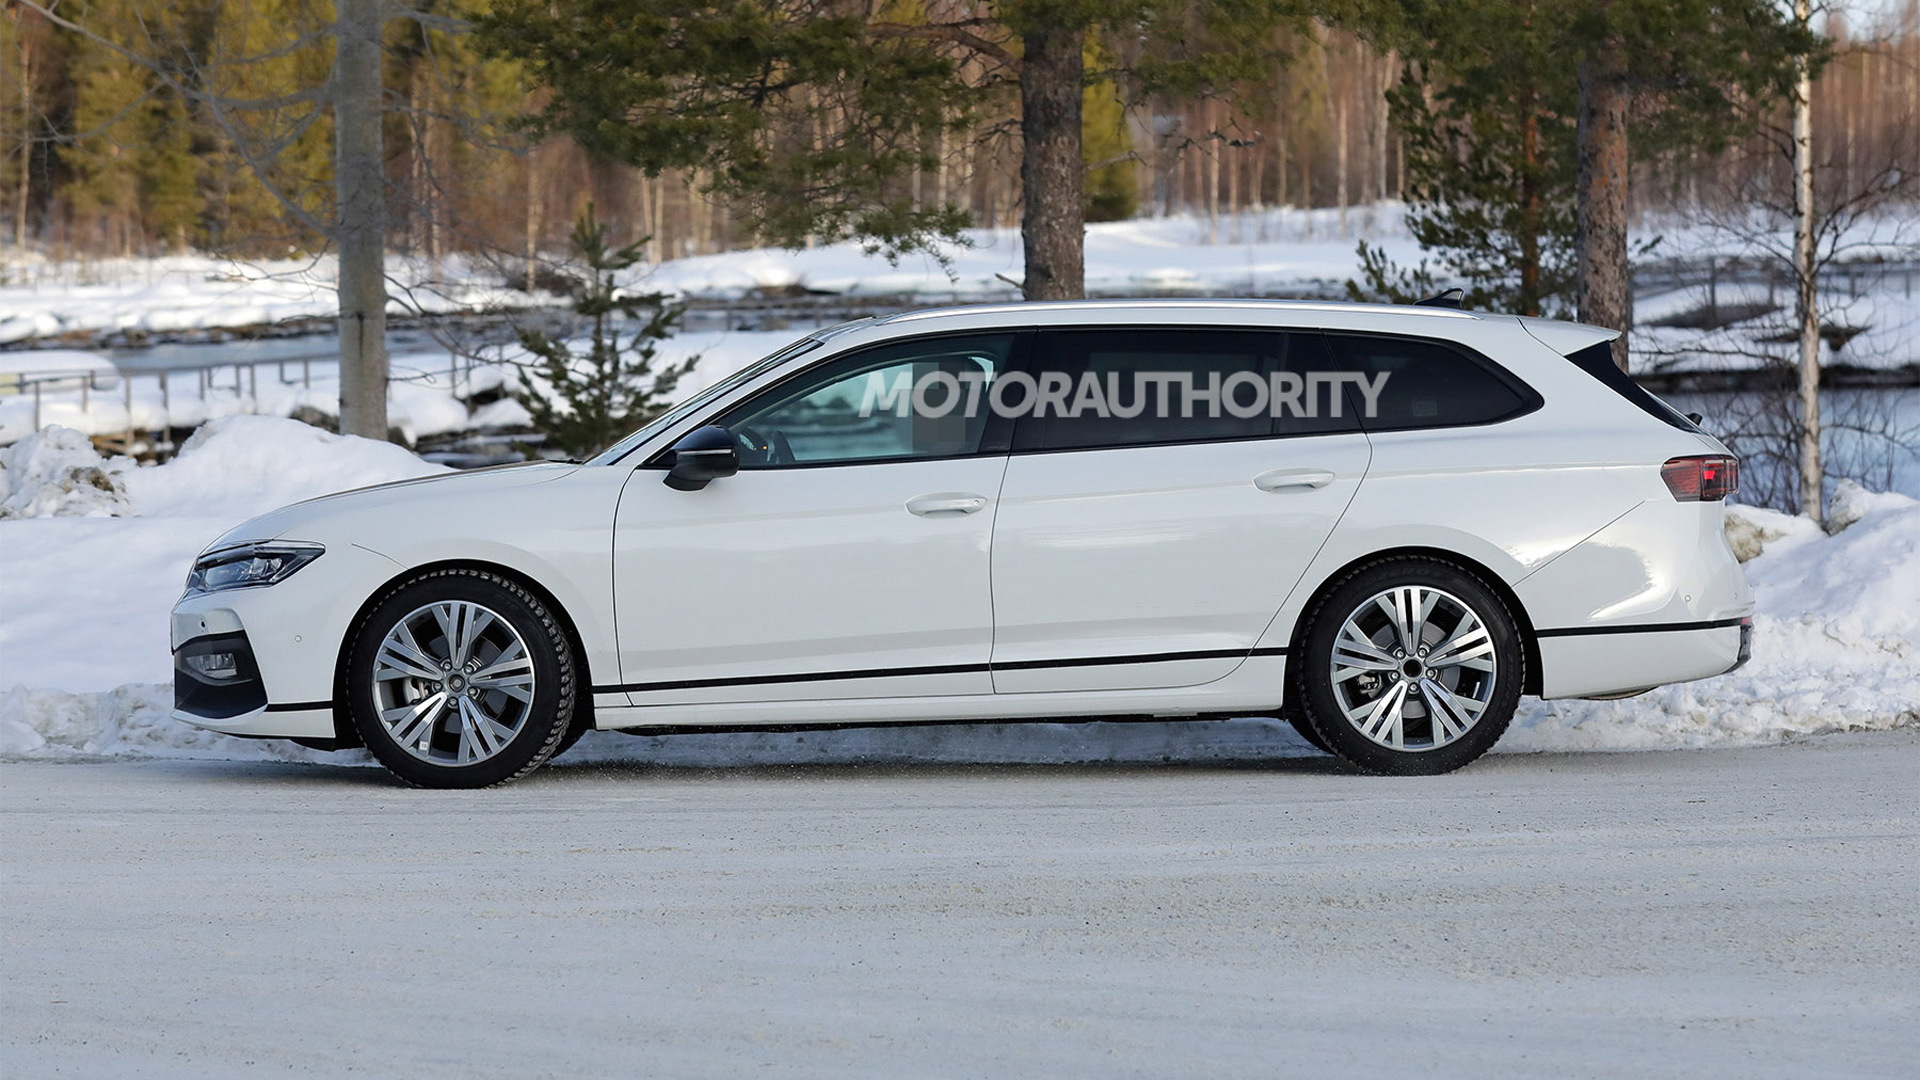 2023 Volkswagen Passat Variant spy shots - Photo credit: Baldauf